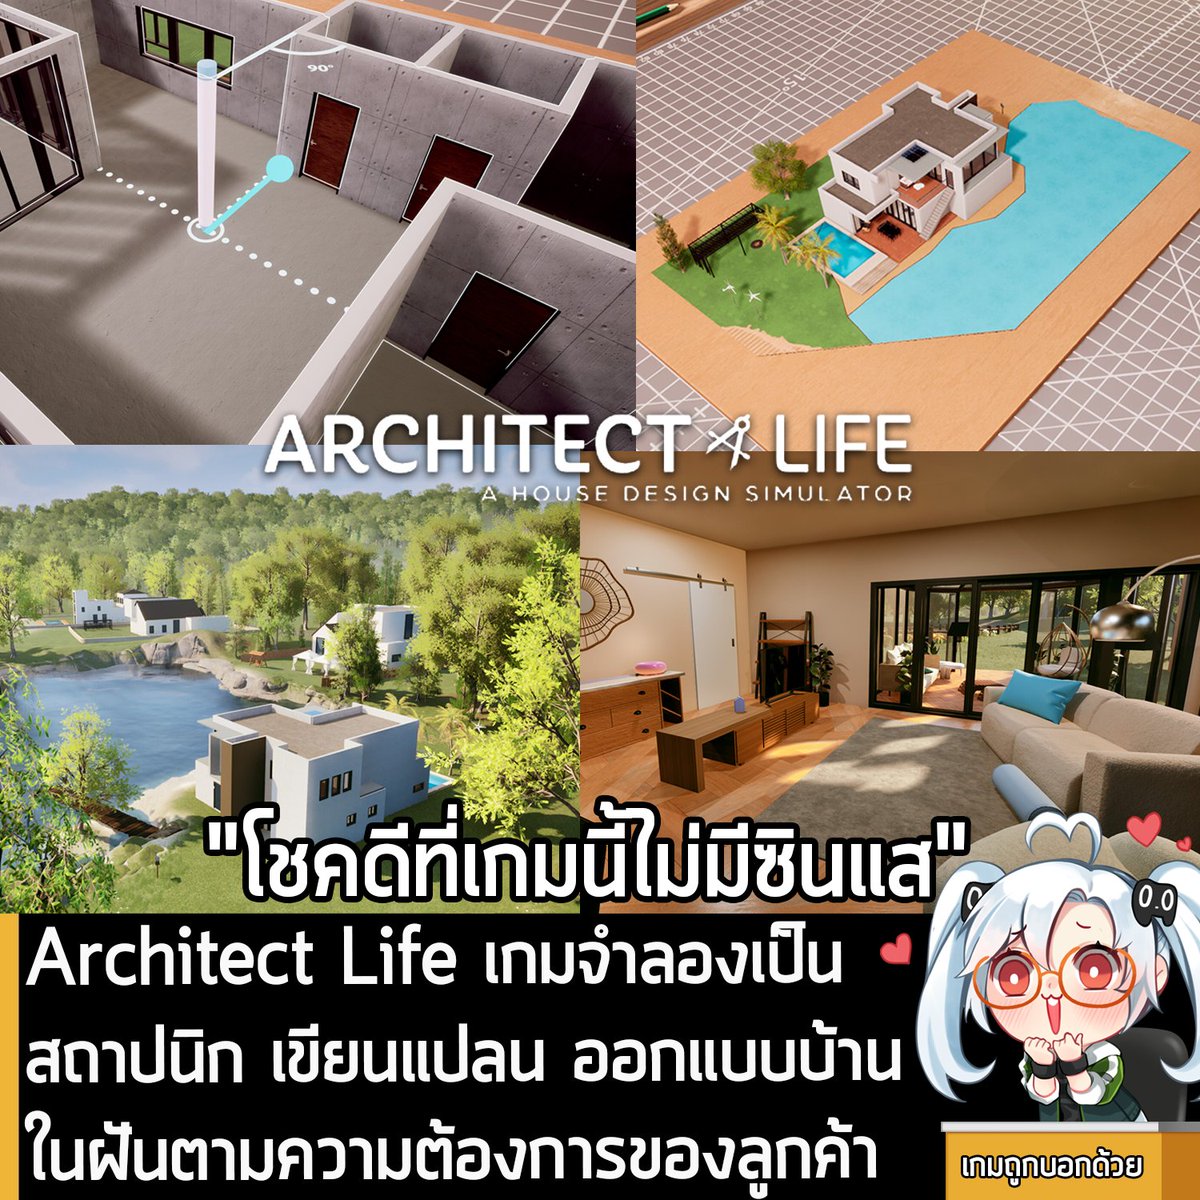 [News] Architect Life เกมจำลองเป็นสถาปนิก เขียนแปลน ออกแบบบ้านในฝันตามความต้องการของลูกค้า . Nacon และ Shine Research ร่วมกันประกาศเปิดตัว Architect Life: A House Design Simulator เกมจำลองการเล่นเป็นสถาปนิก ที่เปิดโอกาสให้คุณออกแบบ ทำโมเดลบ้าน 3 มิติ ทำตามความต้องการของลูกค้า